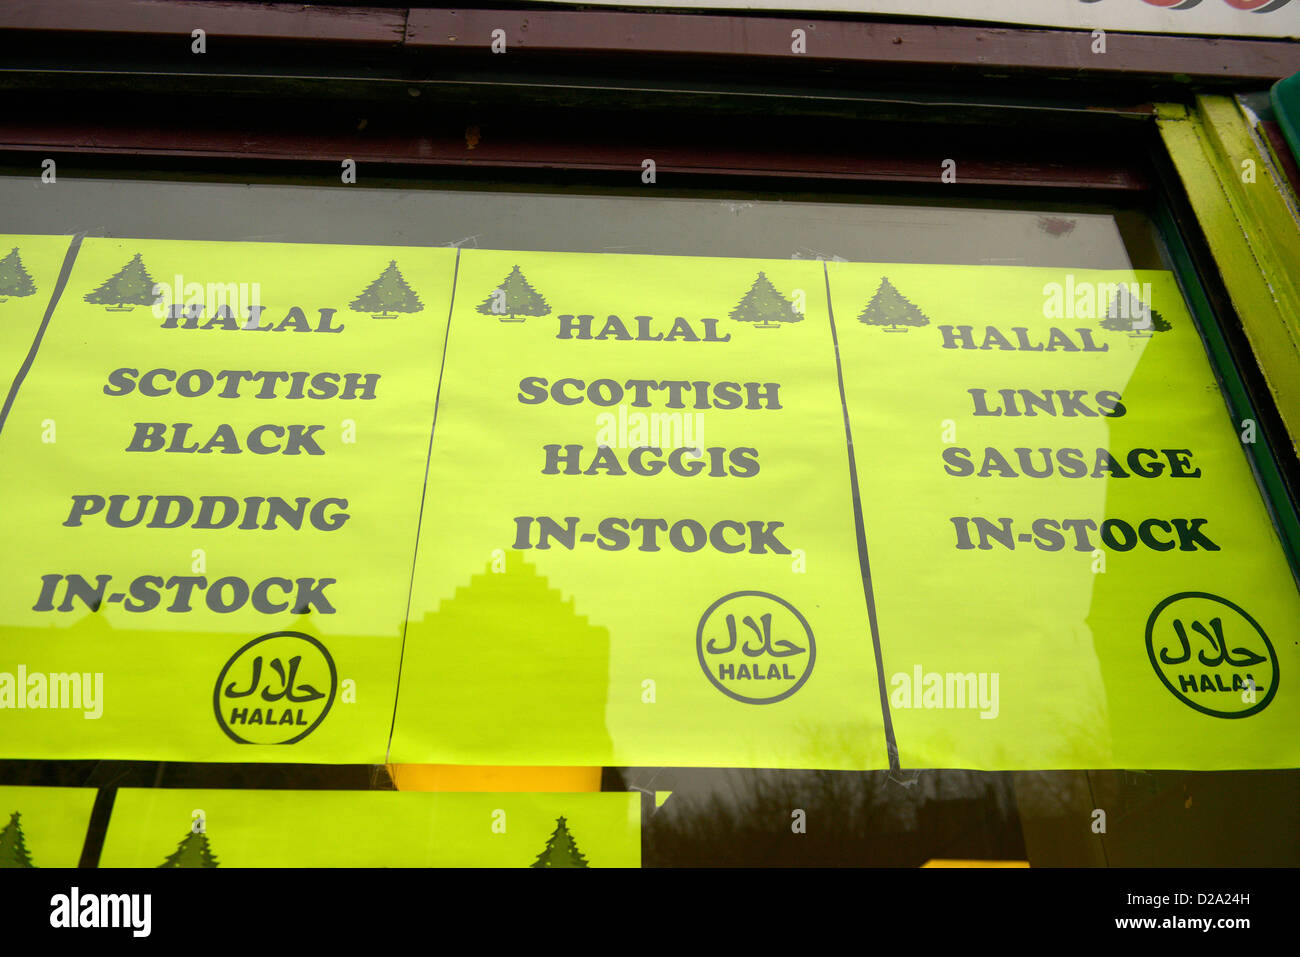 halal scottish meat products Stock Photo